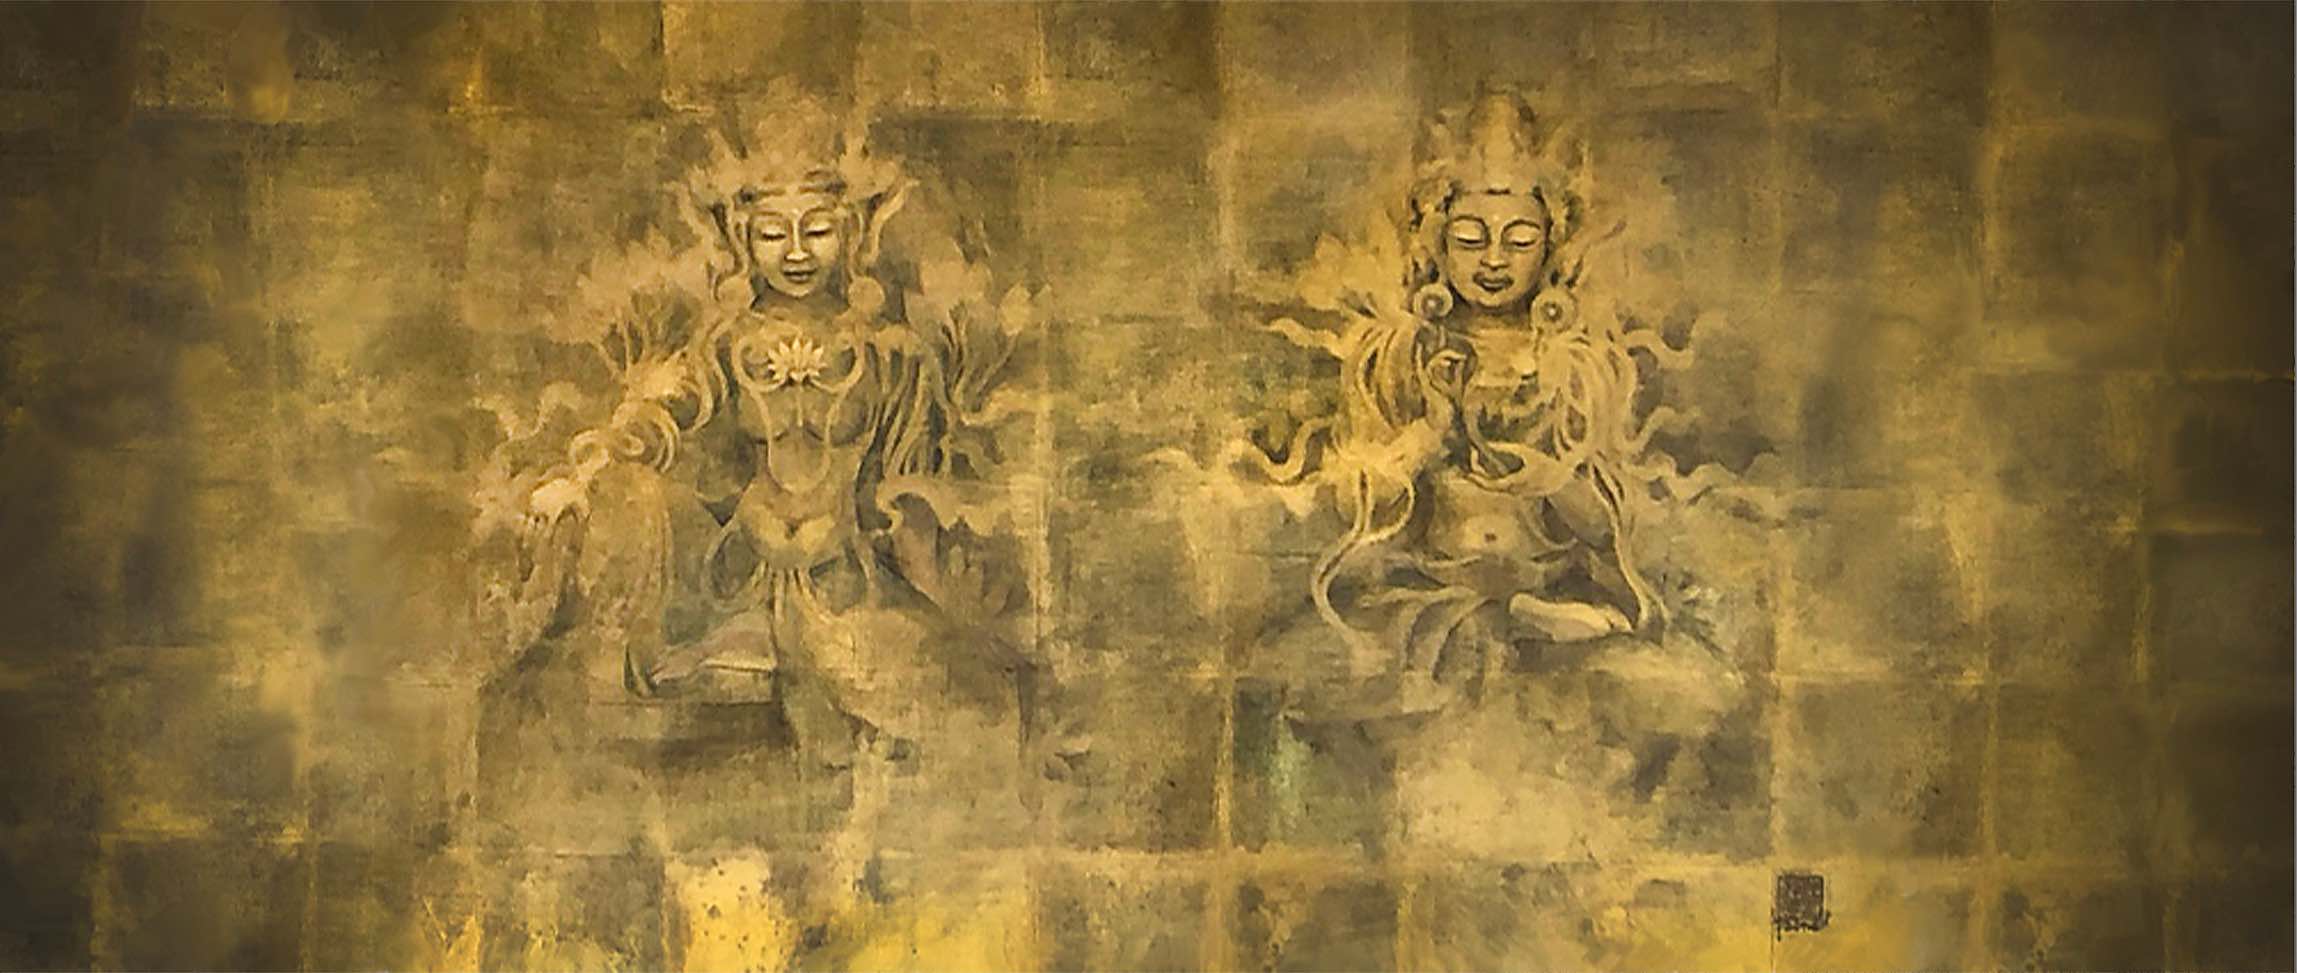 2buddhas